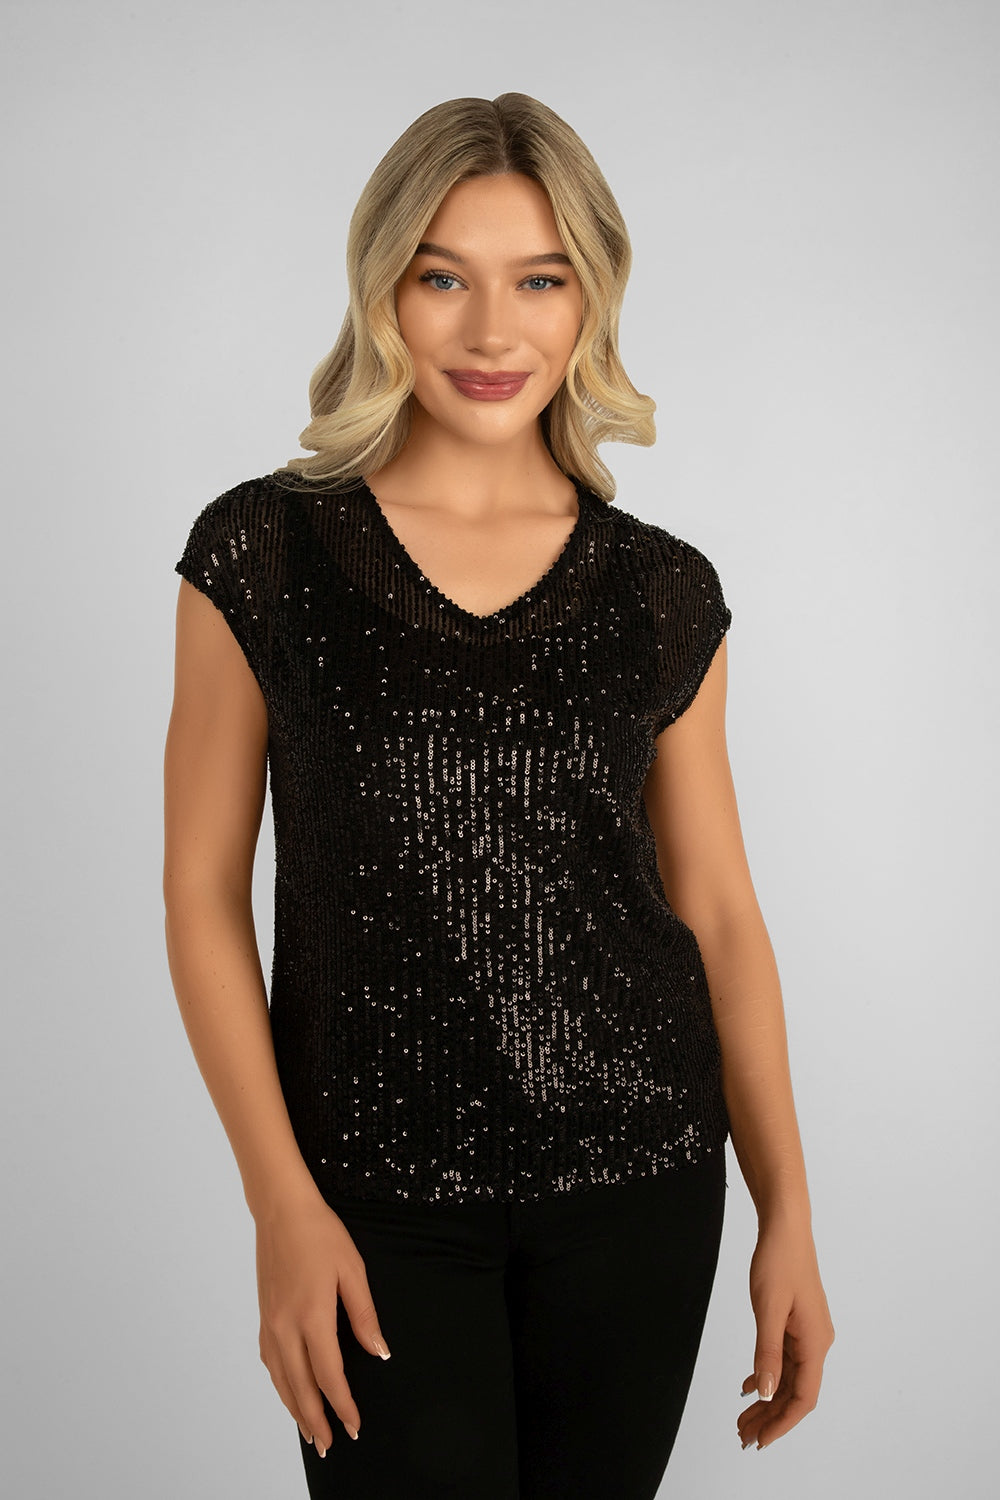 Women's Clothing FRANK LYMAN (234249) Cap Sleeve Sequin Top in BLACK